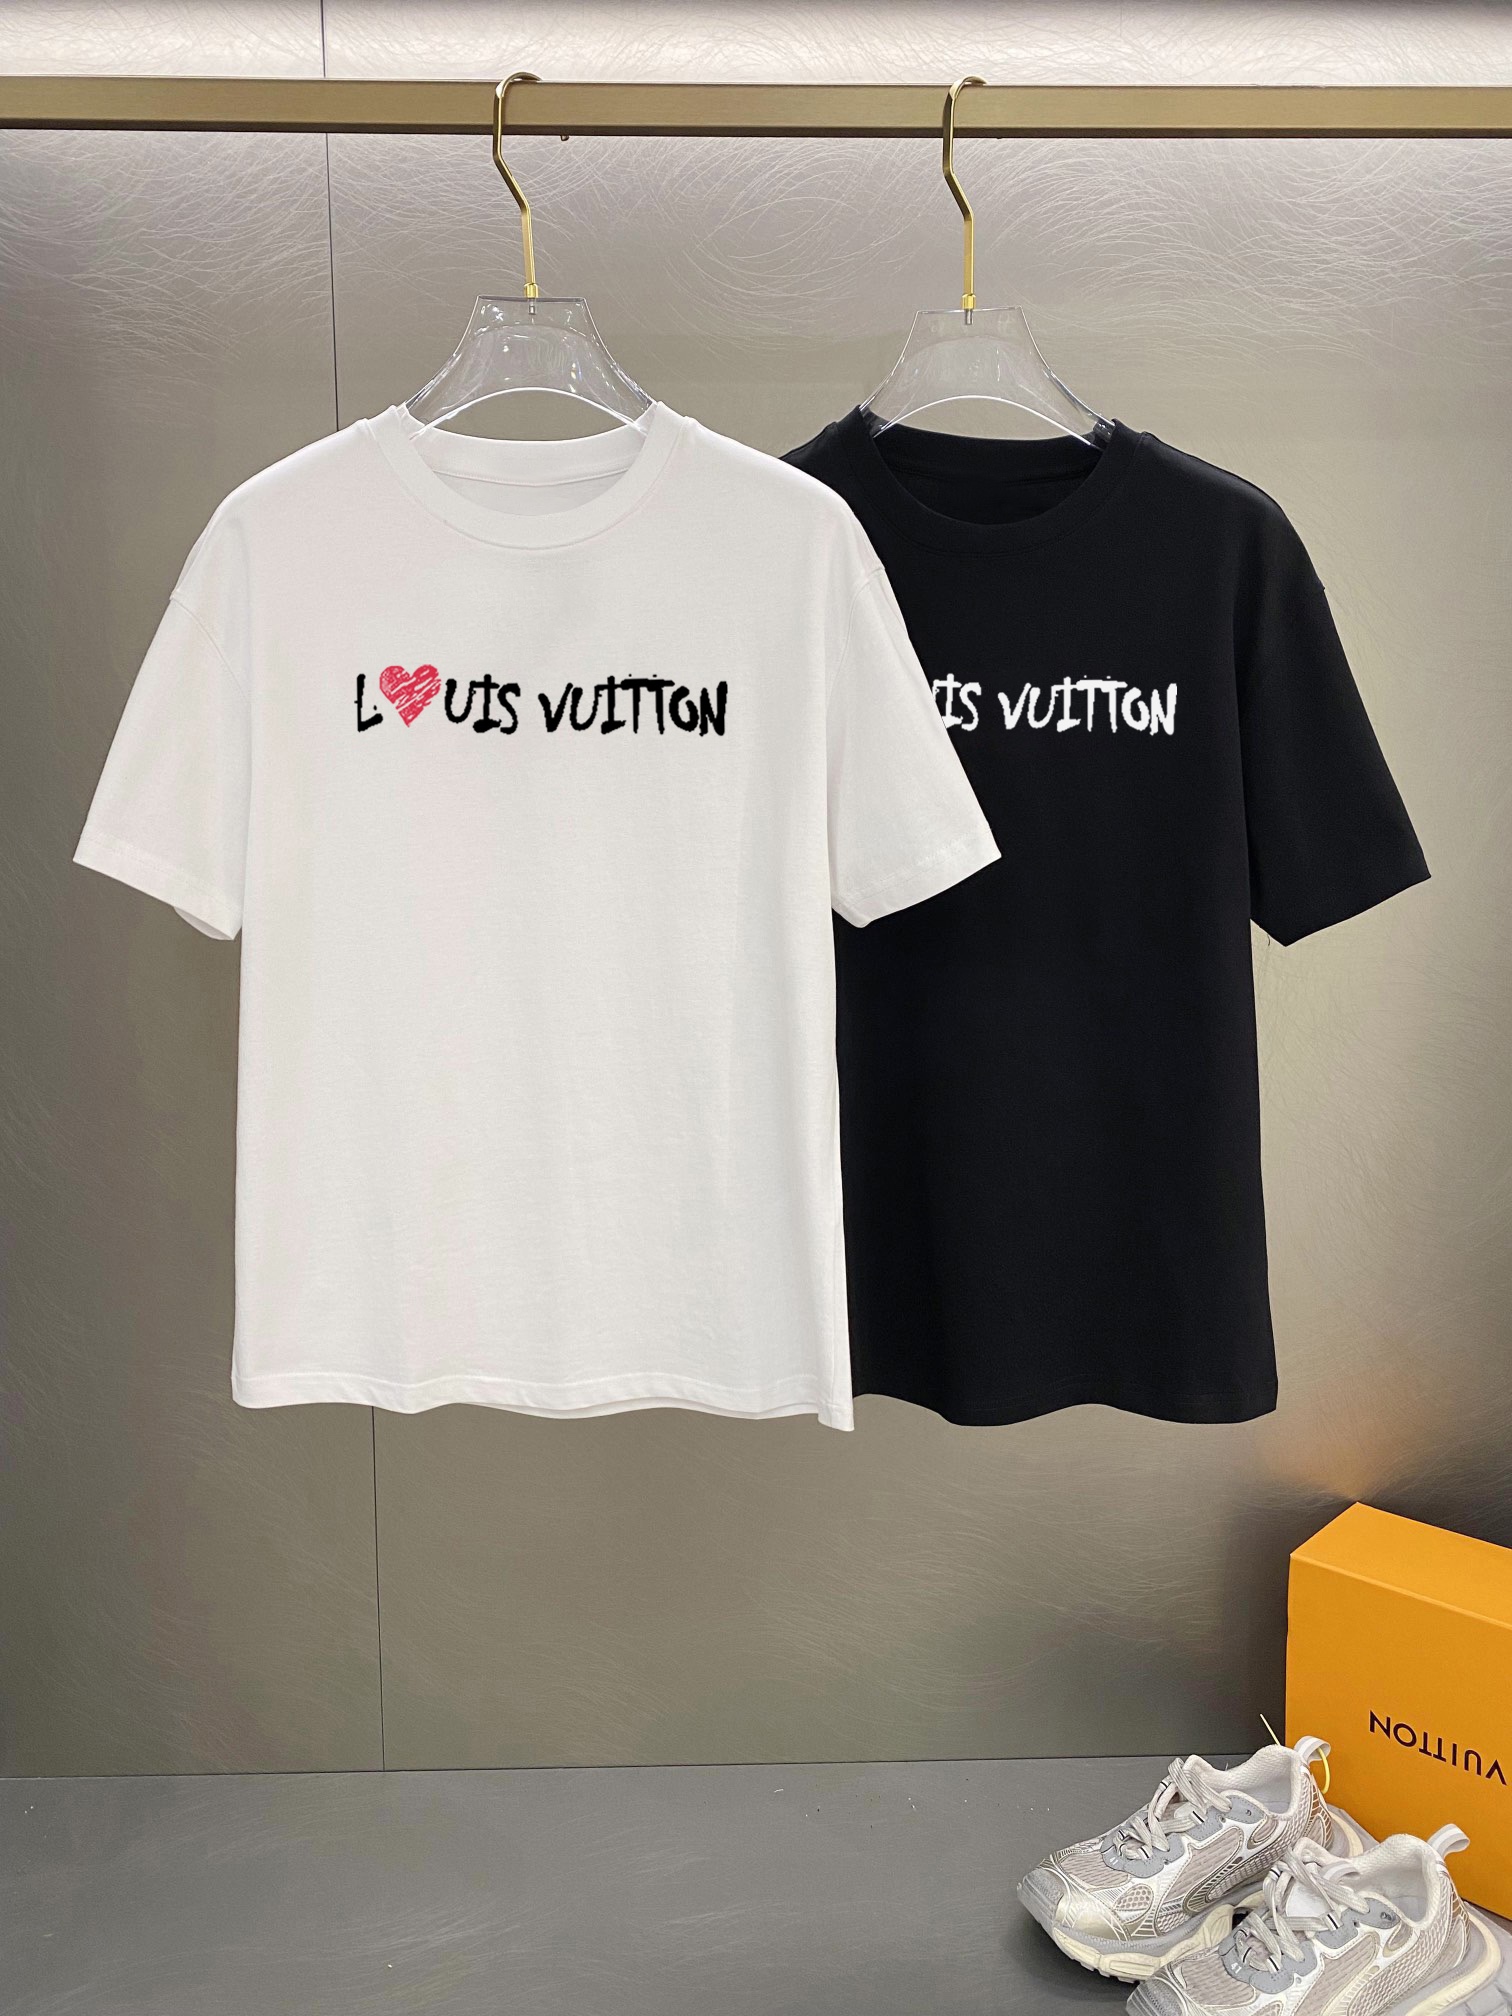 Louis Vuitton Clothing T-Shirt Black White Printing Cotton Short Sleeve